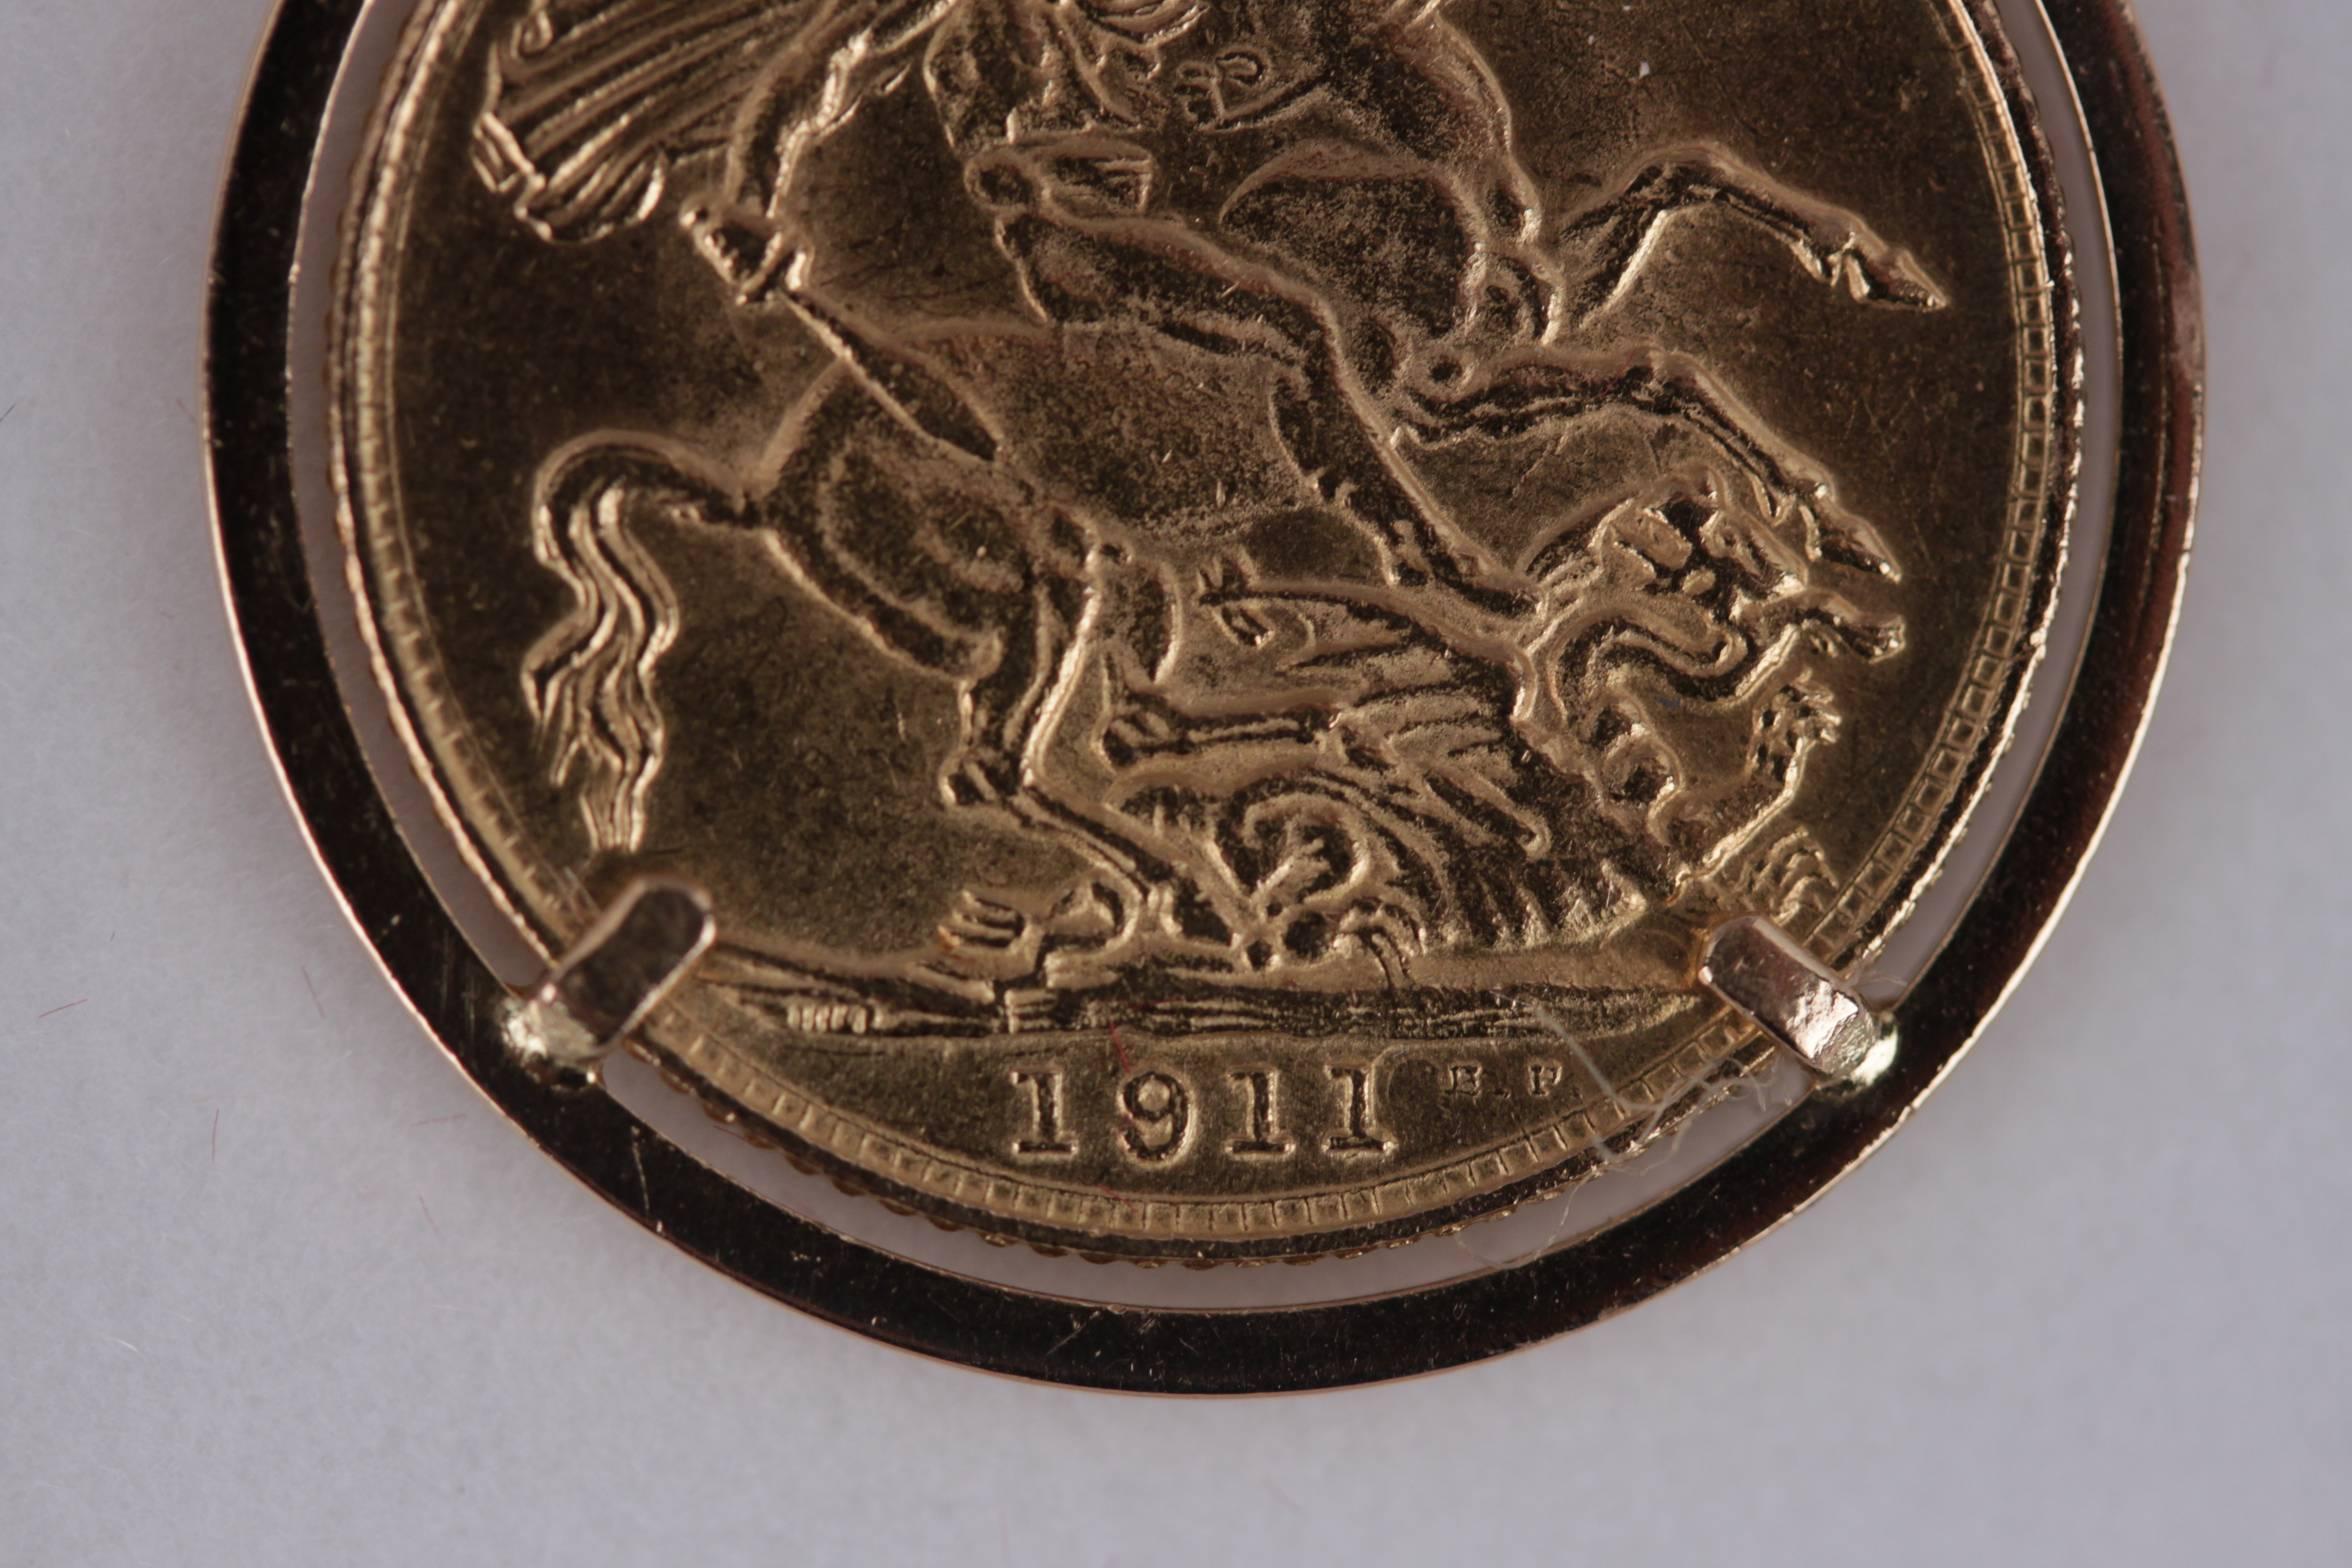 georgivs v d g britt gold coin 1911 value